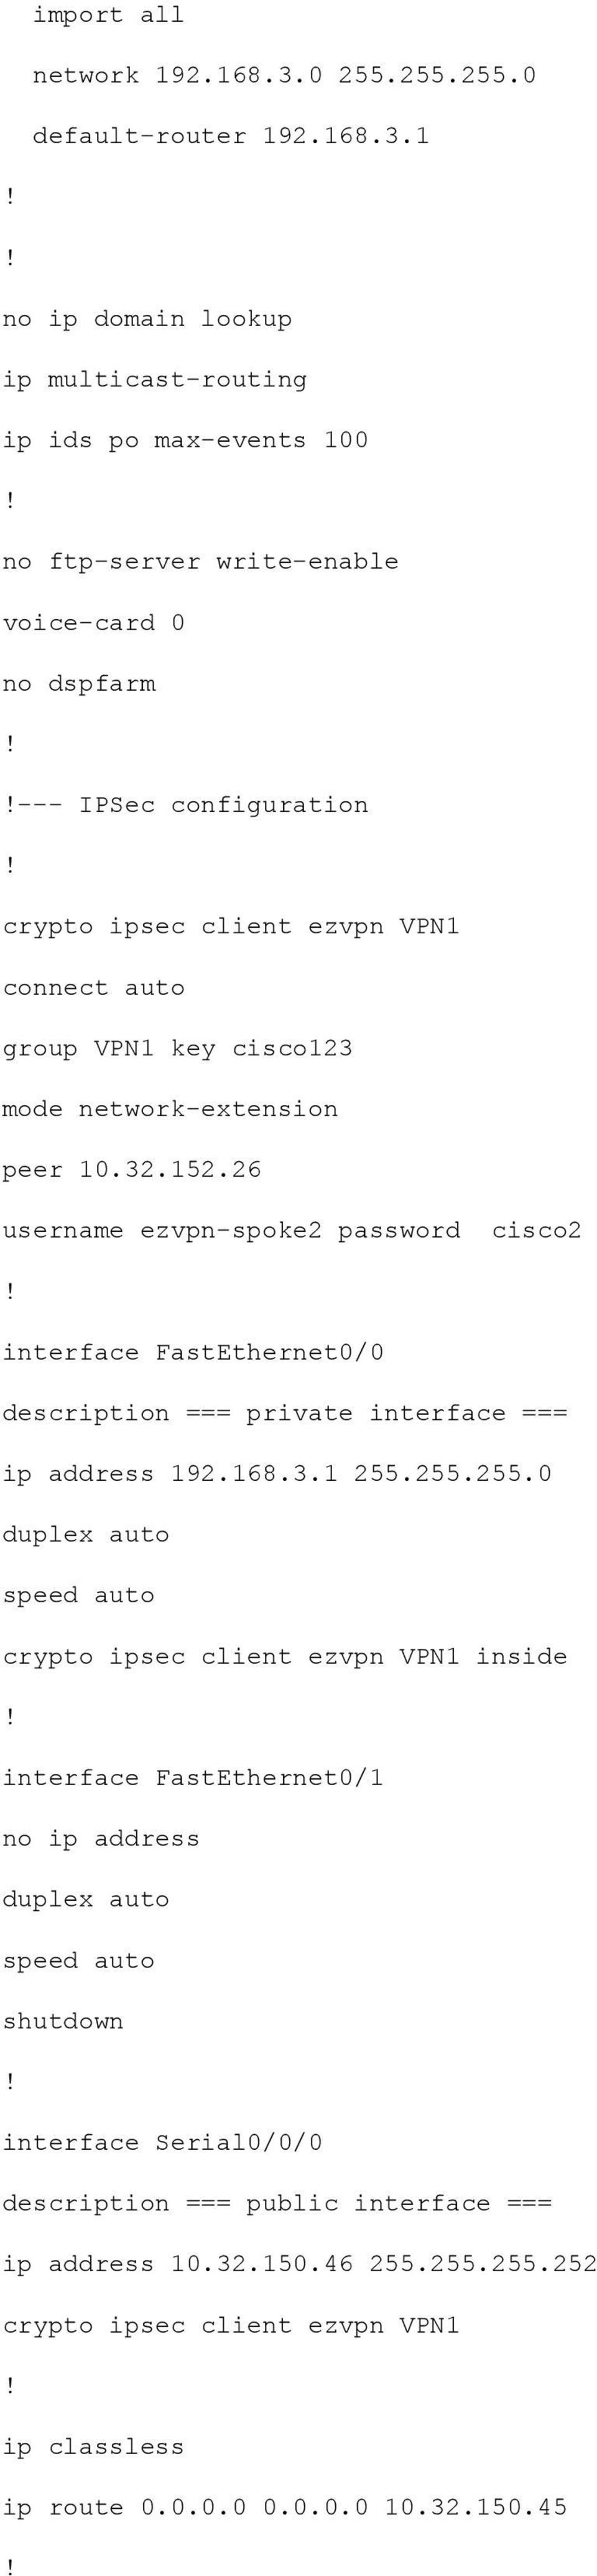 1 no ip domain lookup ip multicast-routing ip ids po max-events 100 no ftp-server write-enable voice-card 0 no dspfarm --- IPSec configuration crypto ipsec client ezvpn VPN1 connect auto